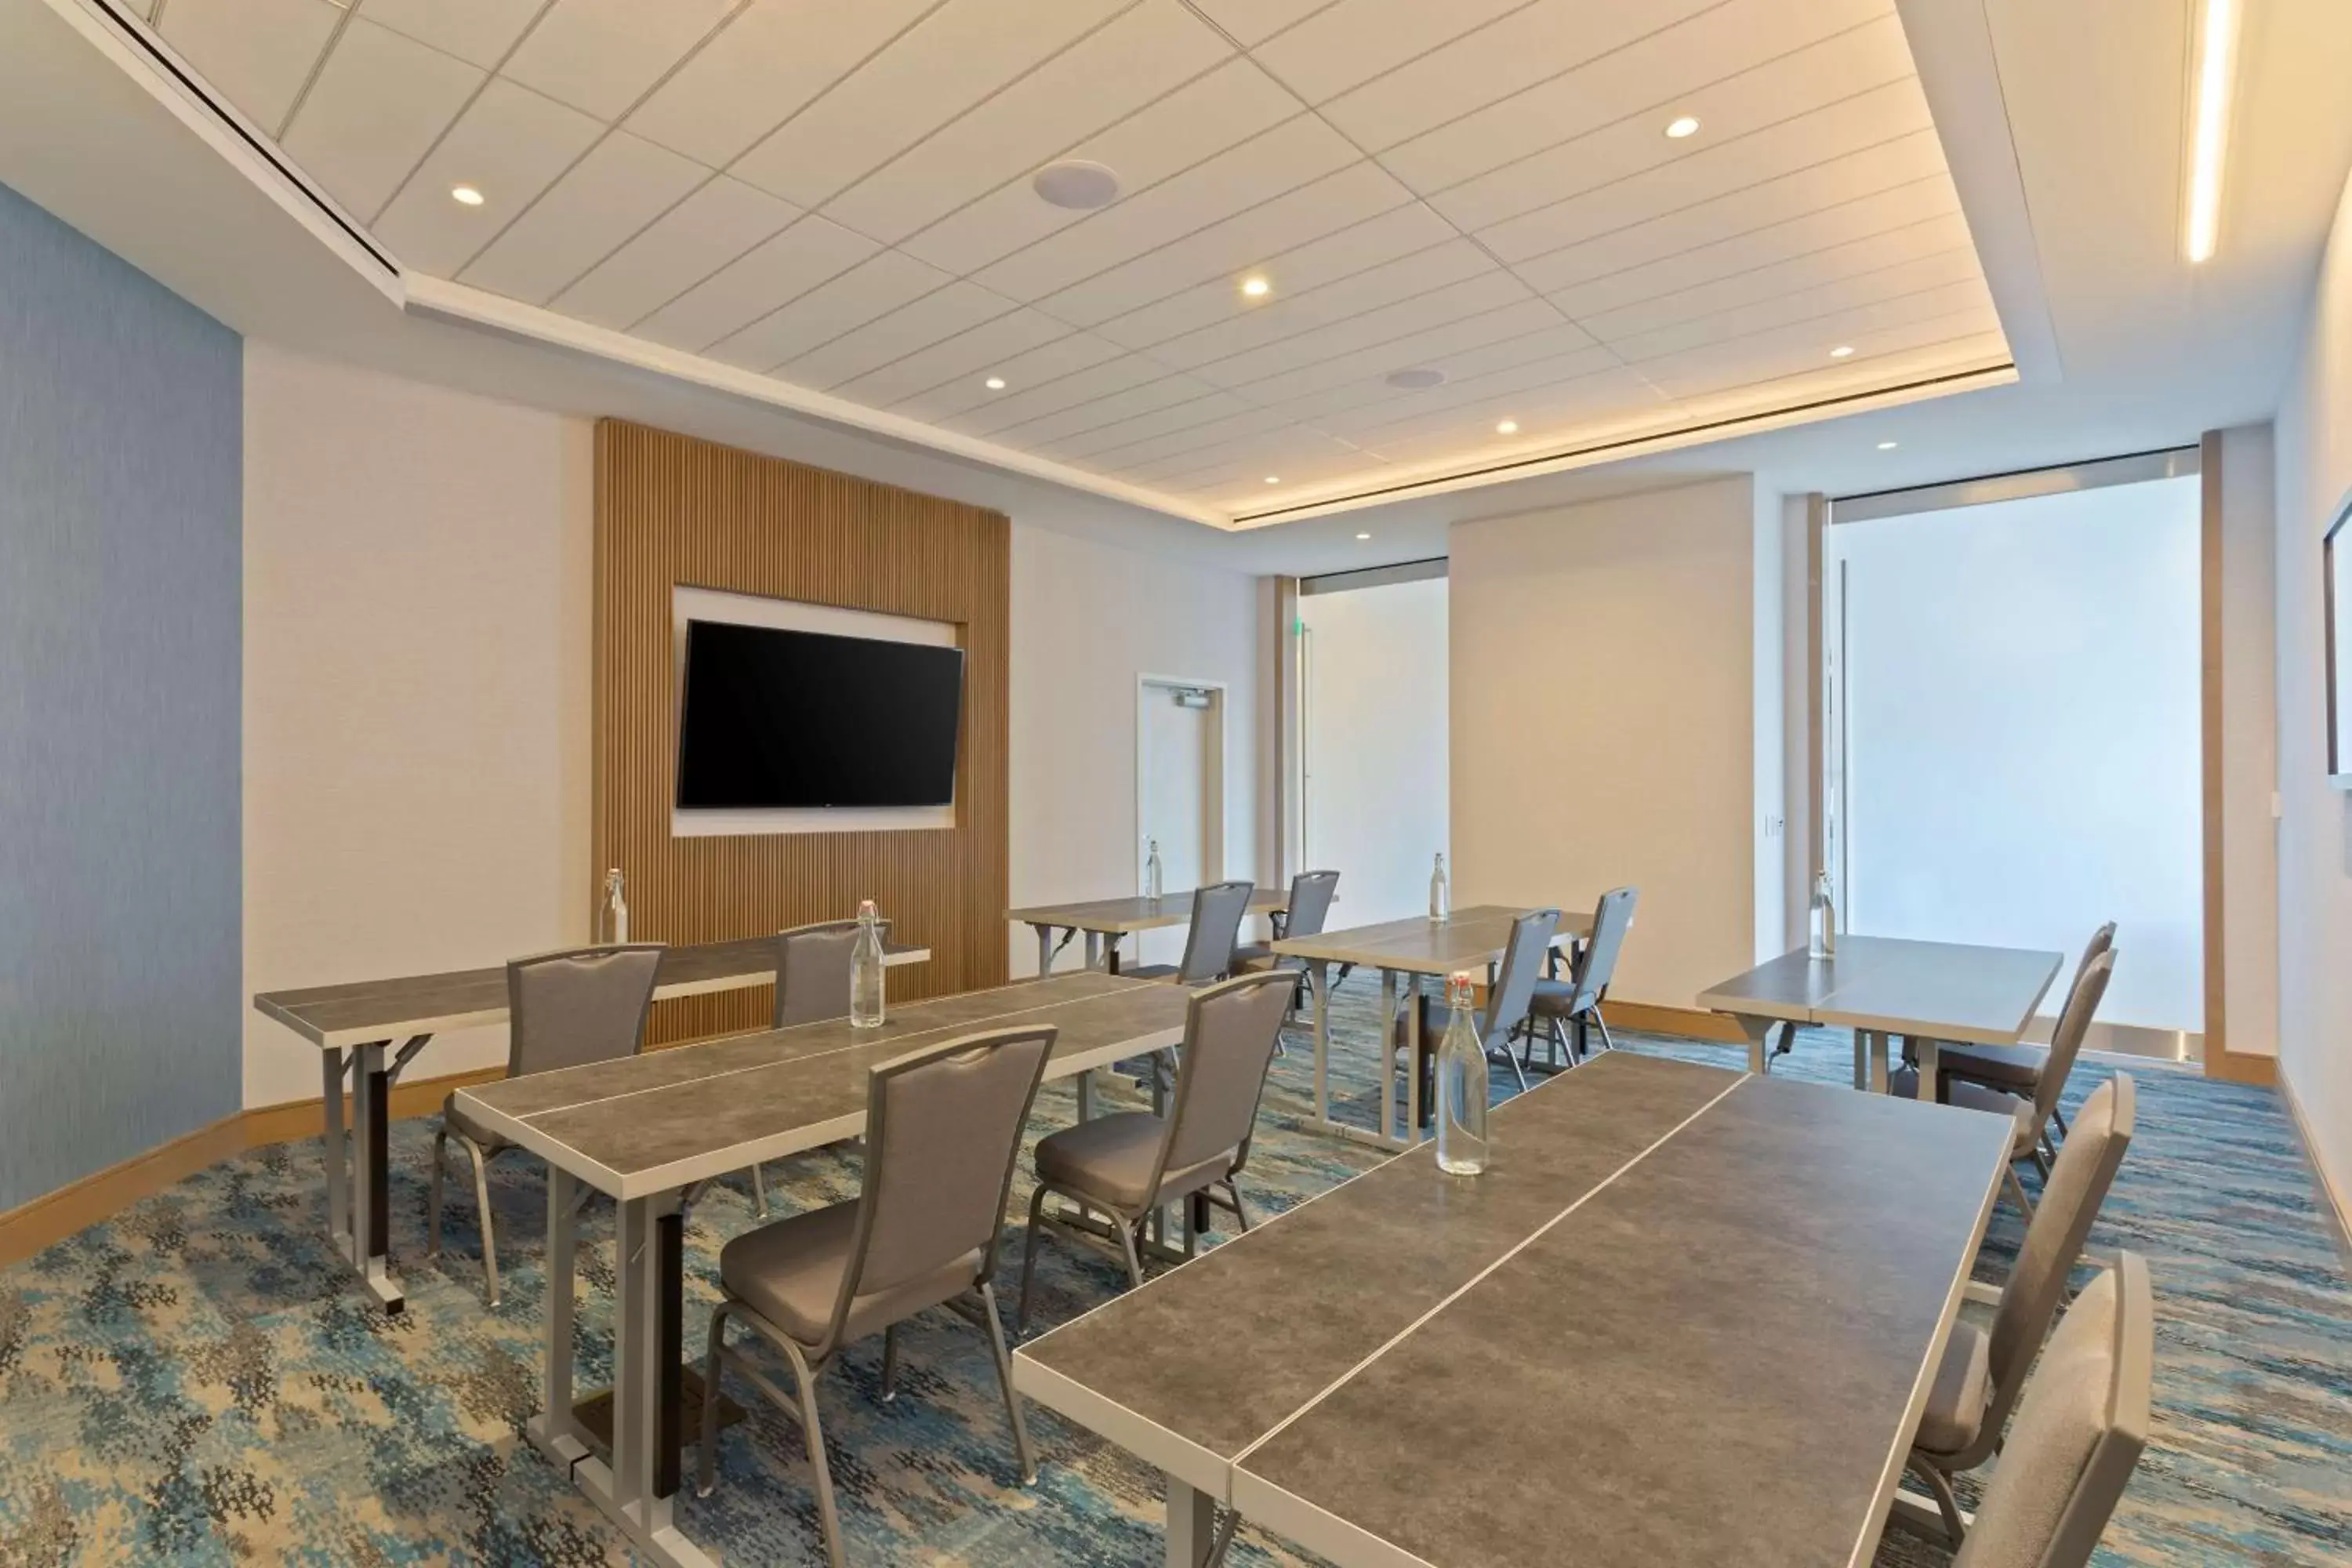 Meeting/conference room in Hilton Garden Inn Boston Brookline, Ma